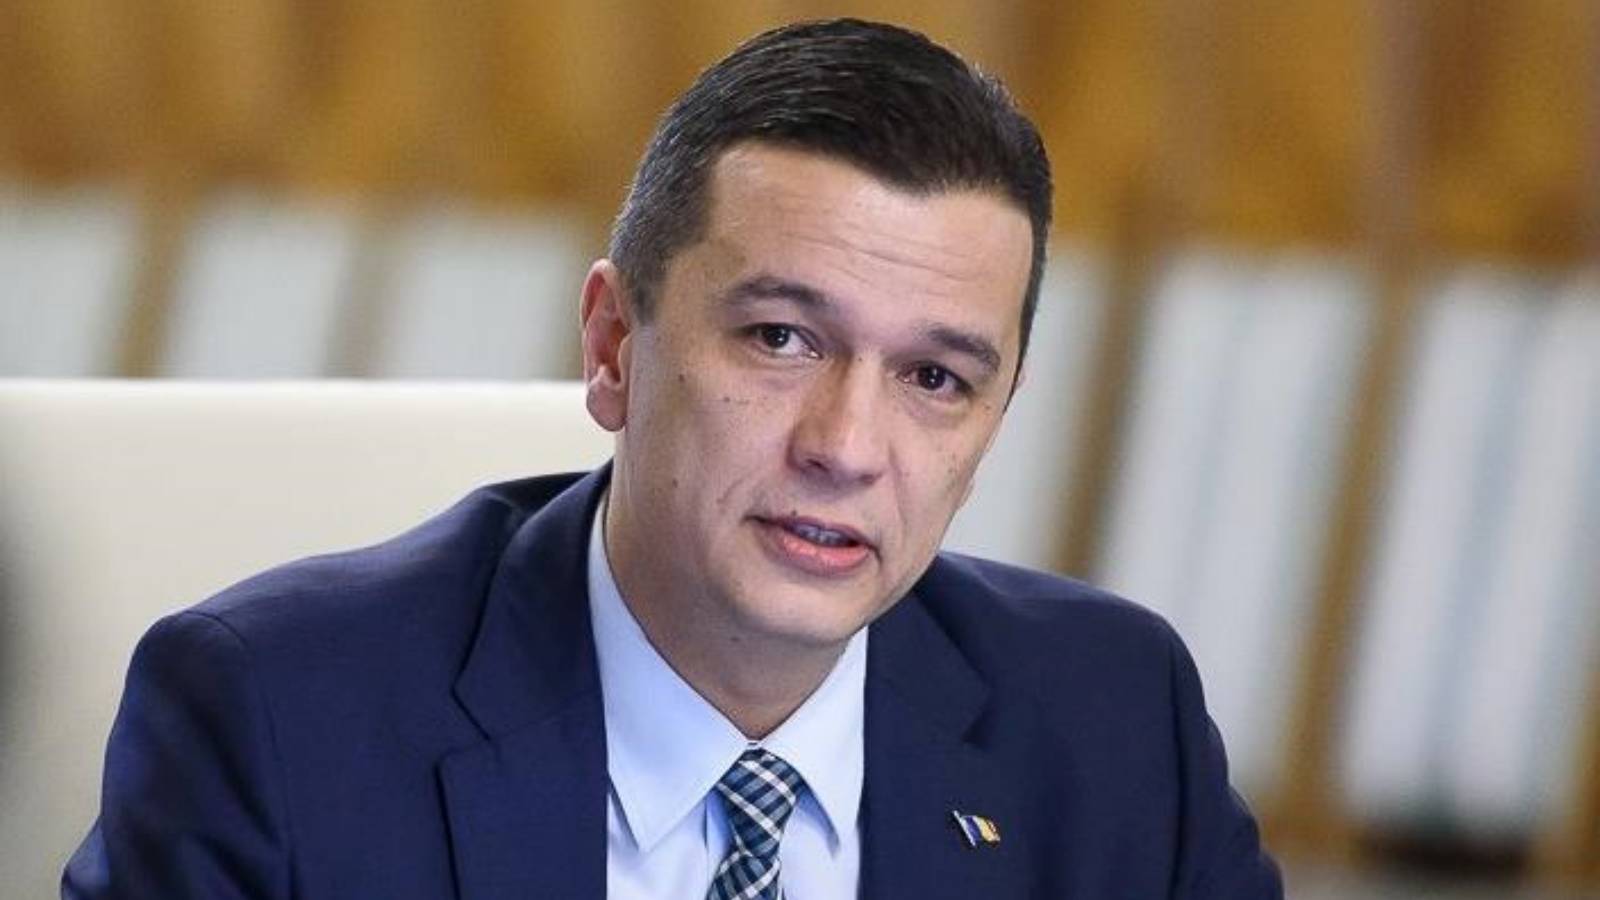 Sorin Grindeanu Anuntul Oficial Nou Sector Autostrada Aprobat Guvern